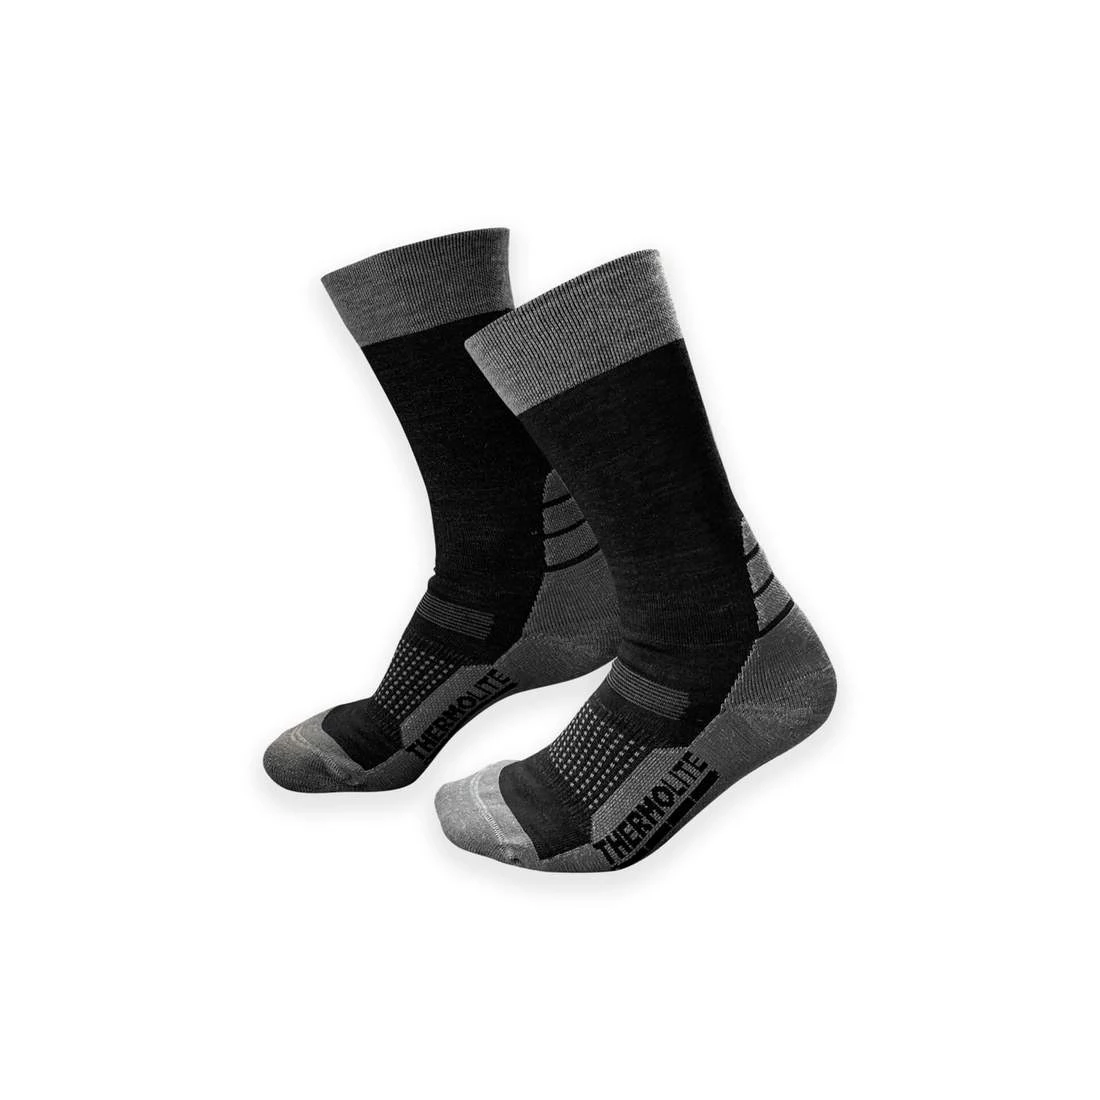 Gamakatsu G-Socks Thermal Outdoorsocken #35-38 Black Grey